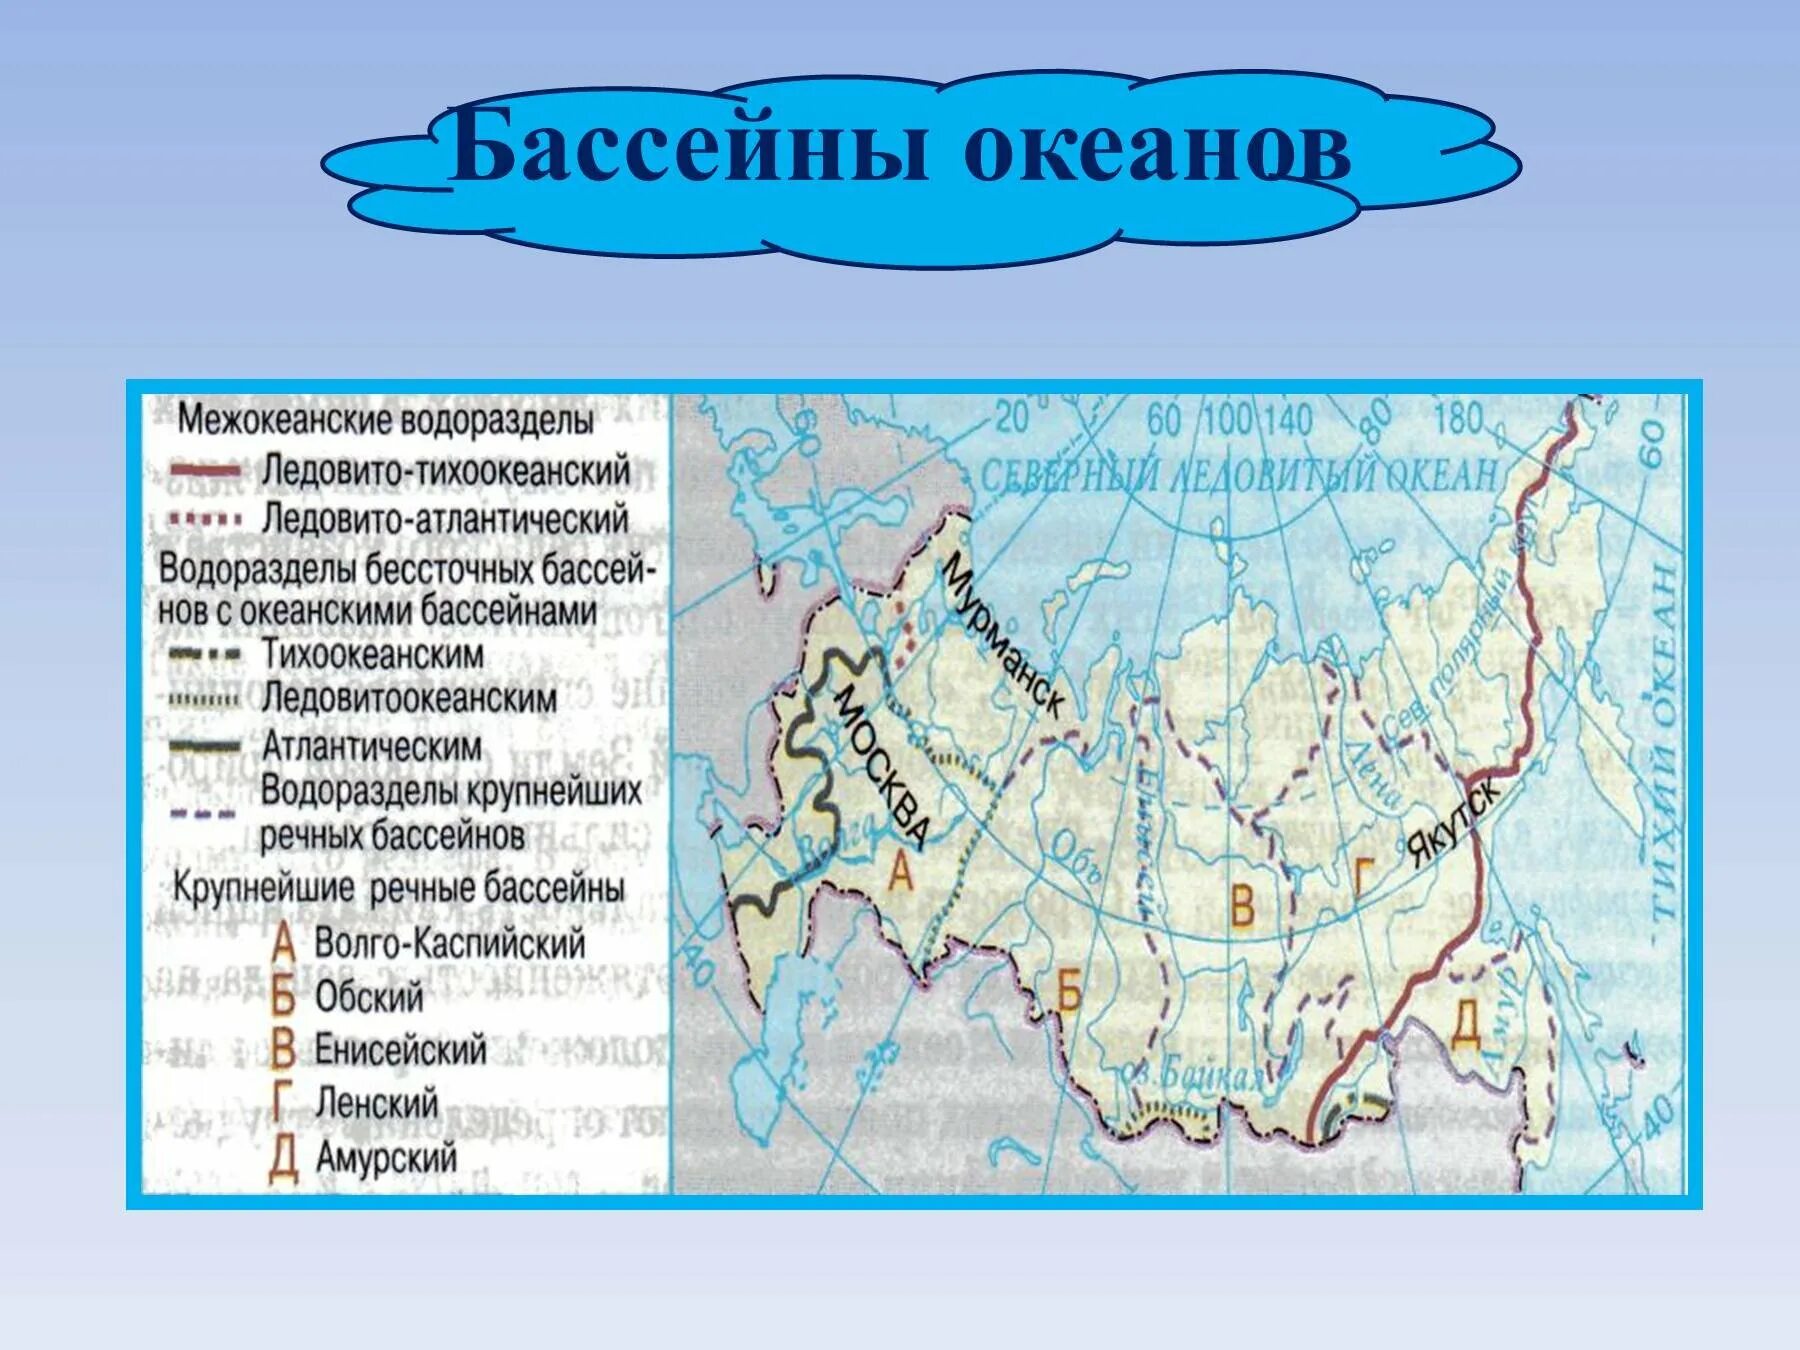 Реки бассейна Северного Ледовитого океана на карте. Реки бассейна Атлантического океана в России на карте. Реки бассейна Северного Ледовитого океана в Евразии. Бассейн Северного Ледовитого океана. Реки рф относятся к бассейнам